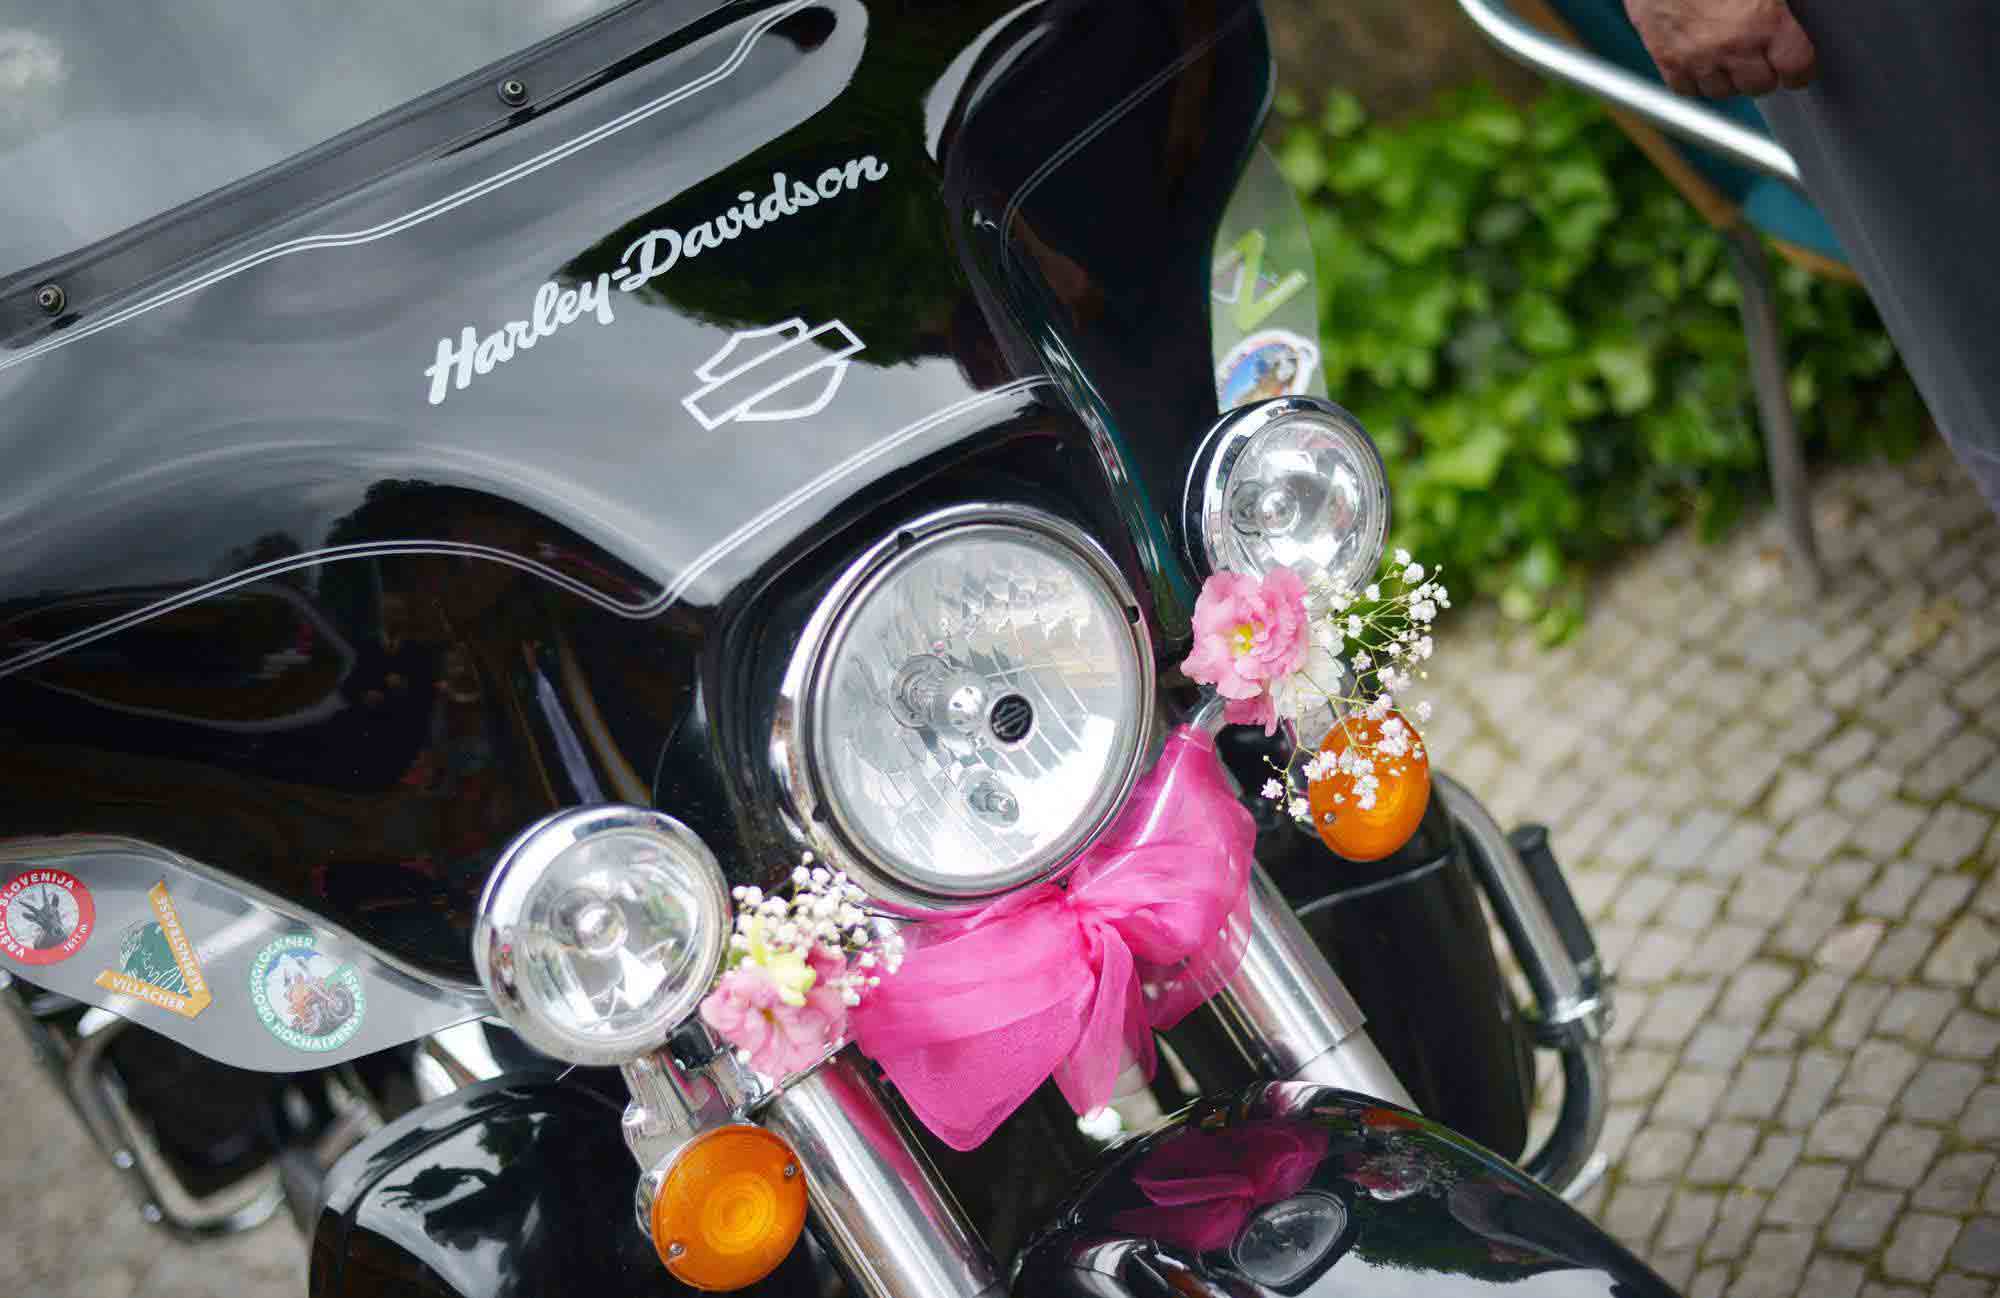 Svatebni vyzdoba na motorku